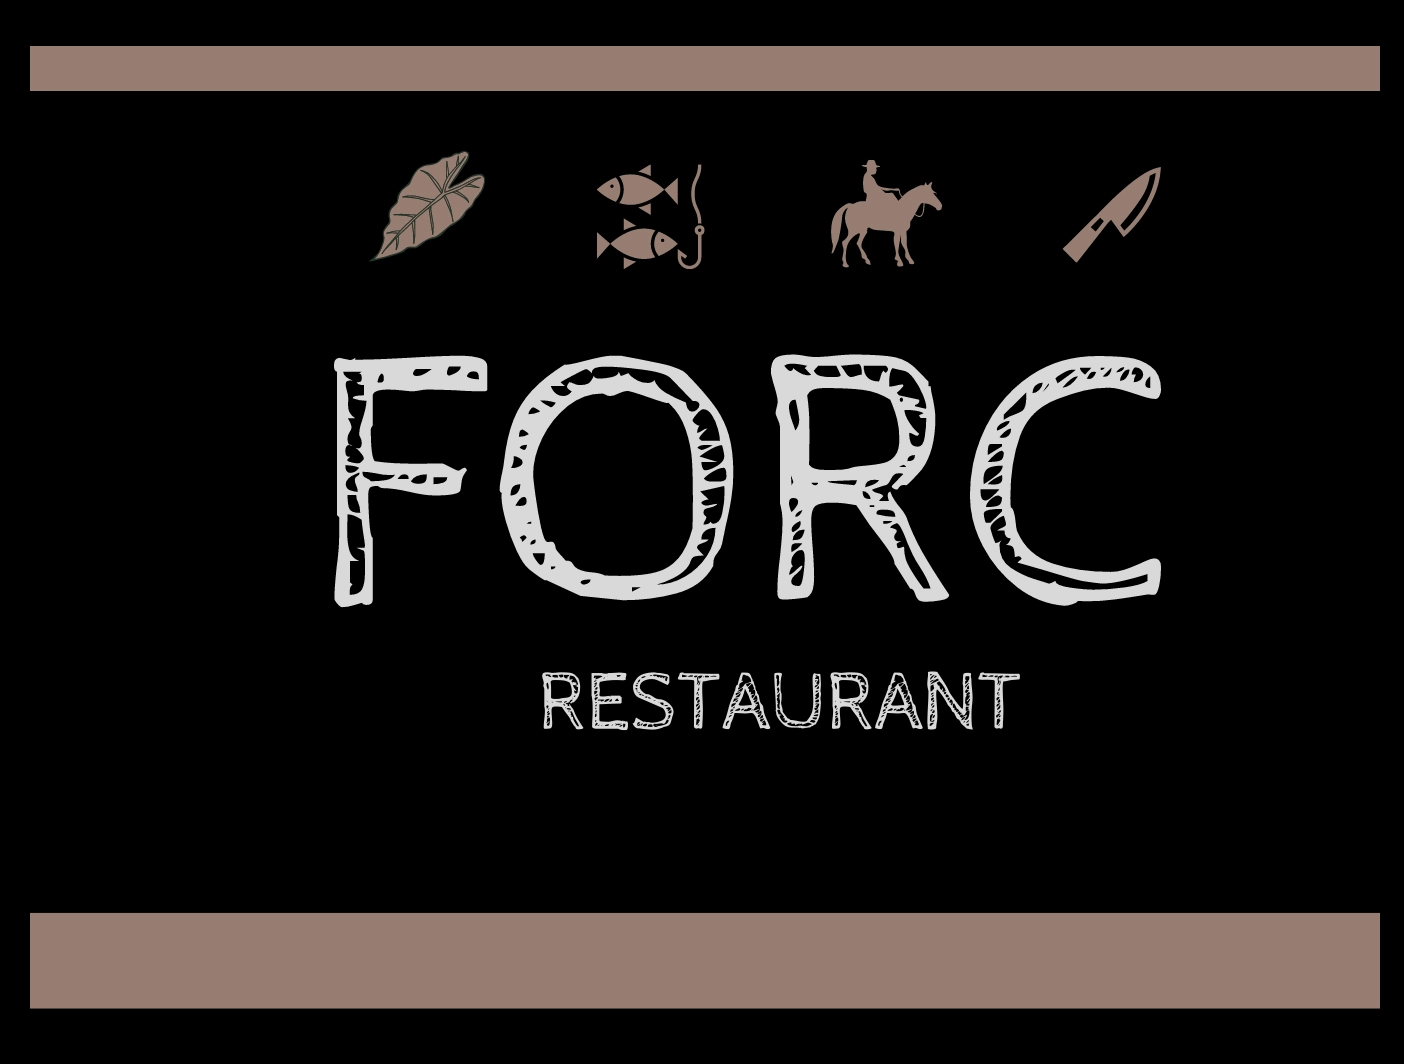 A black and white logo for forc restaurant.